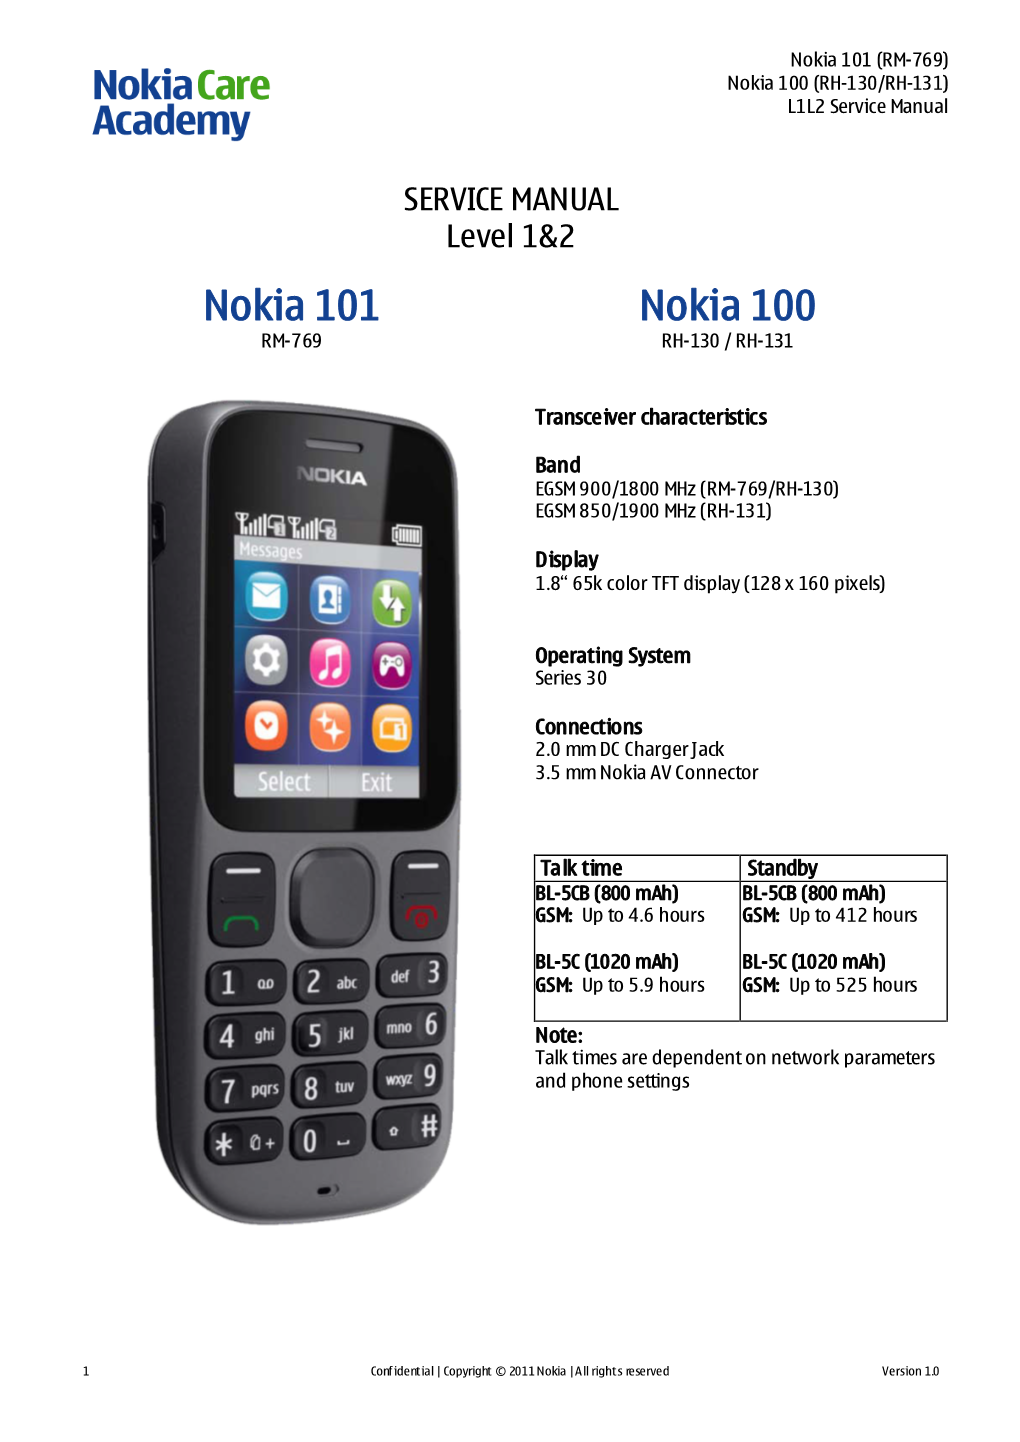 Nokia 101 / 100 RM-769 / RH-130 / RH-131 Service Manual Level 1&2